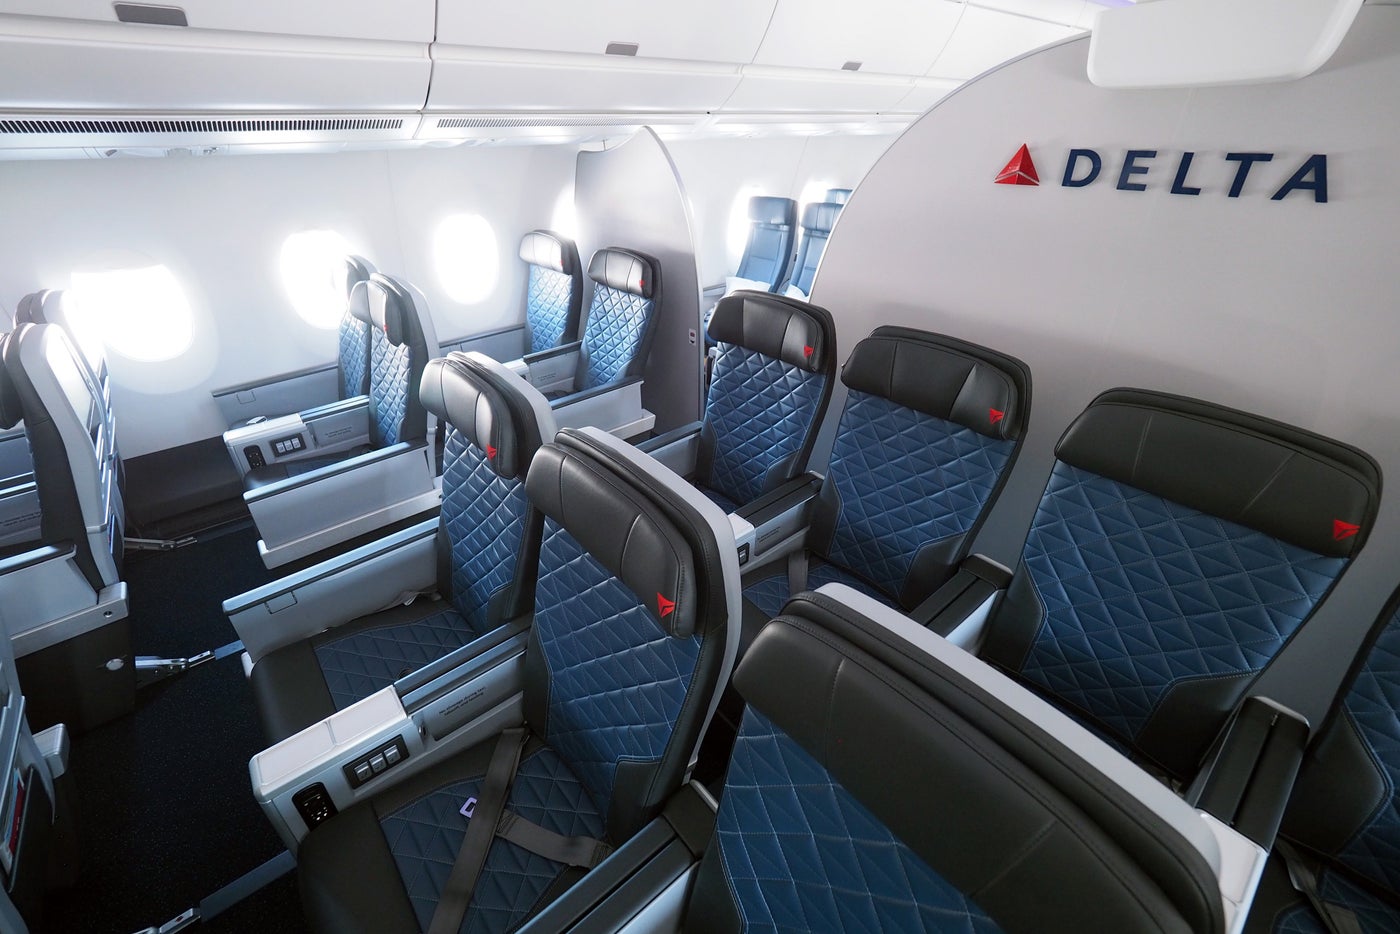 delta seat selection covid